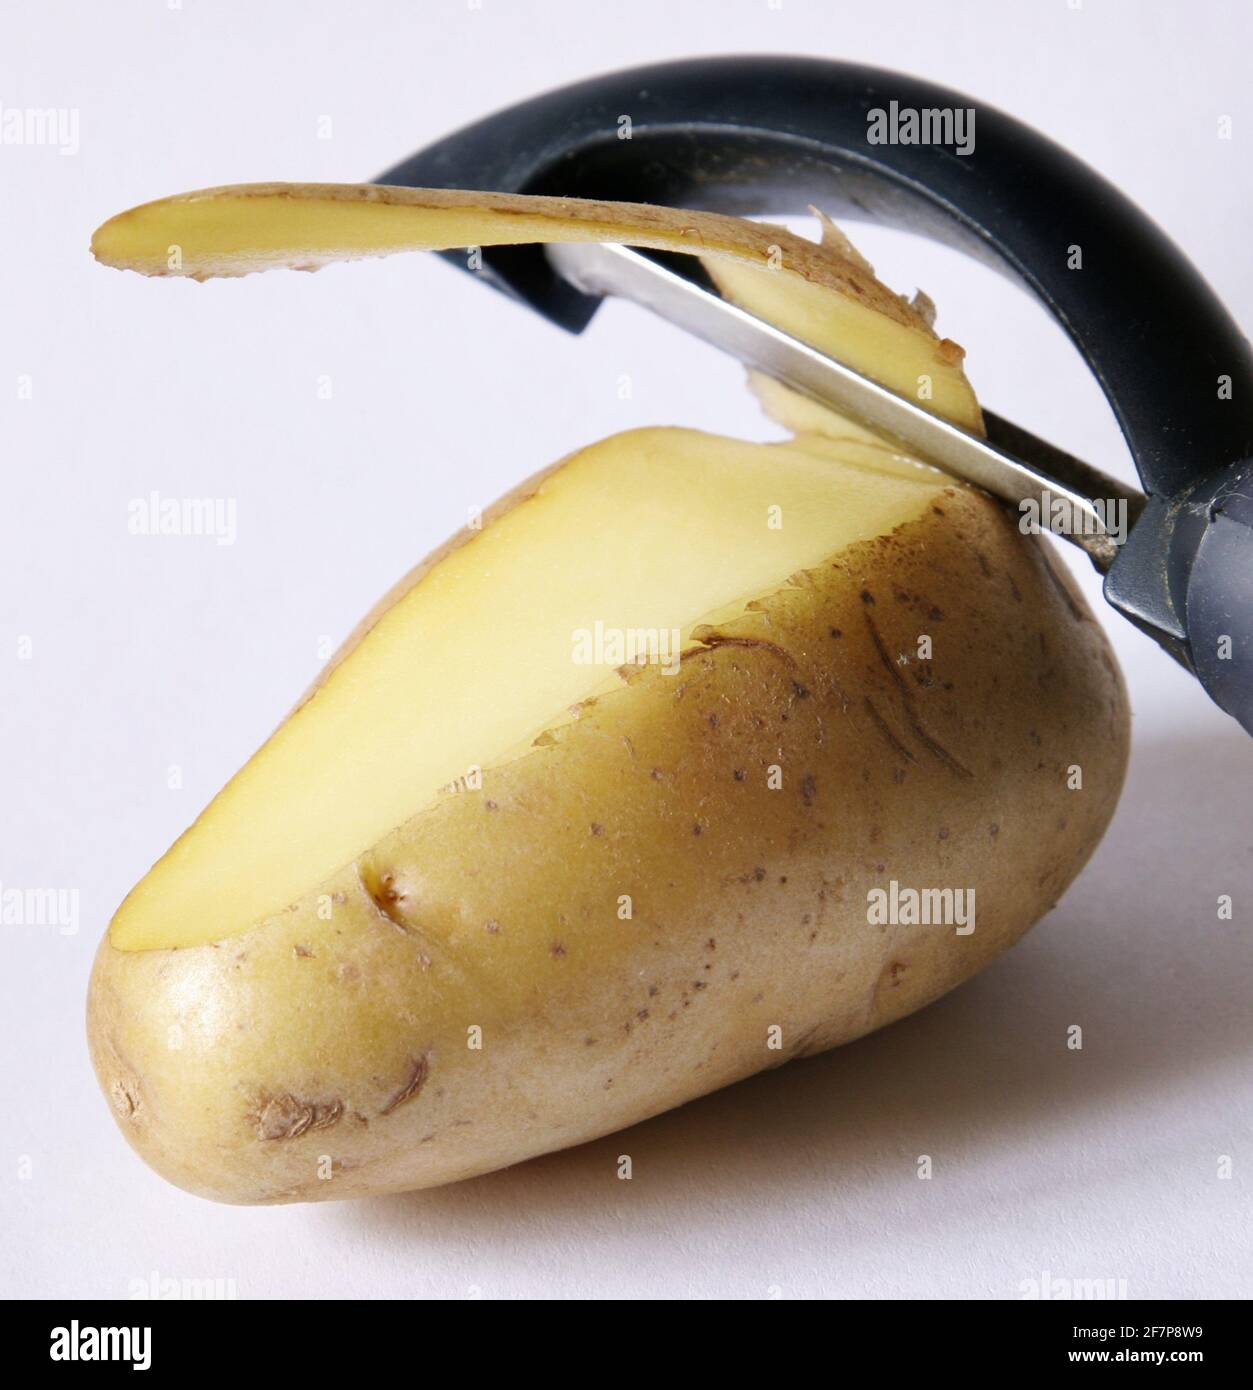 https://c8.alamy.com/comp/2F7P8W9/potato-solanum-tuberosum-potato-is-peeled-with-a-potato-peeler-2F7P8W9.jpg